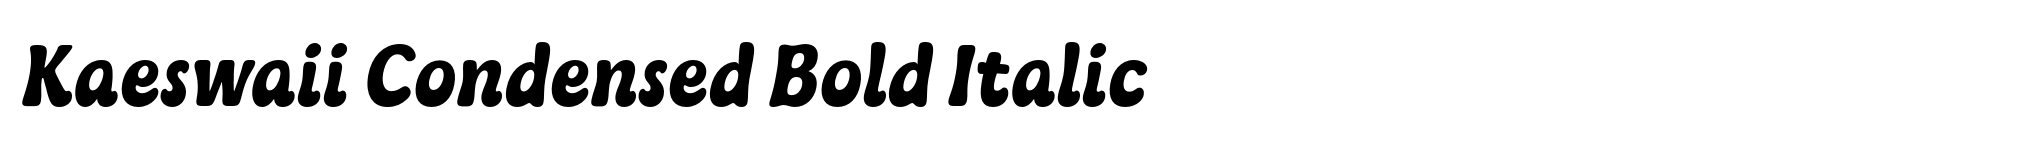 Kaeswaii Condensed Bold Italic image